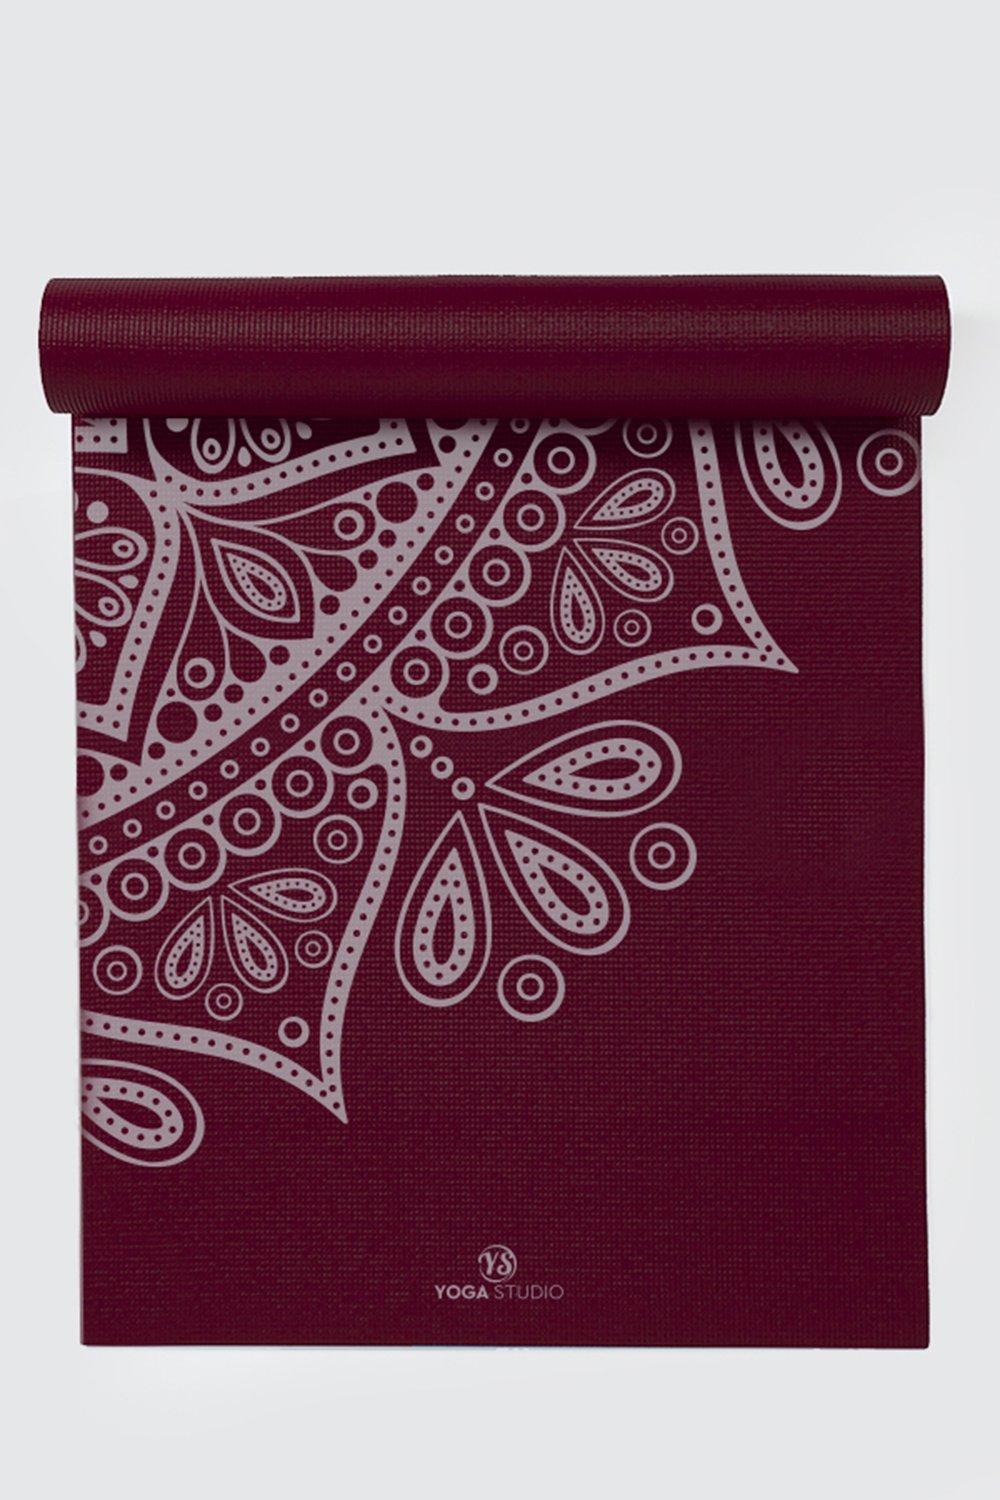 Gaiam Gaiam Purple Mandala Yoga Mat 6mm Premium - Sports Equipment